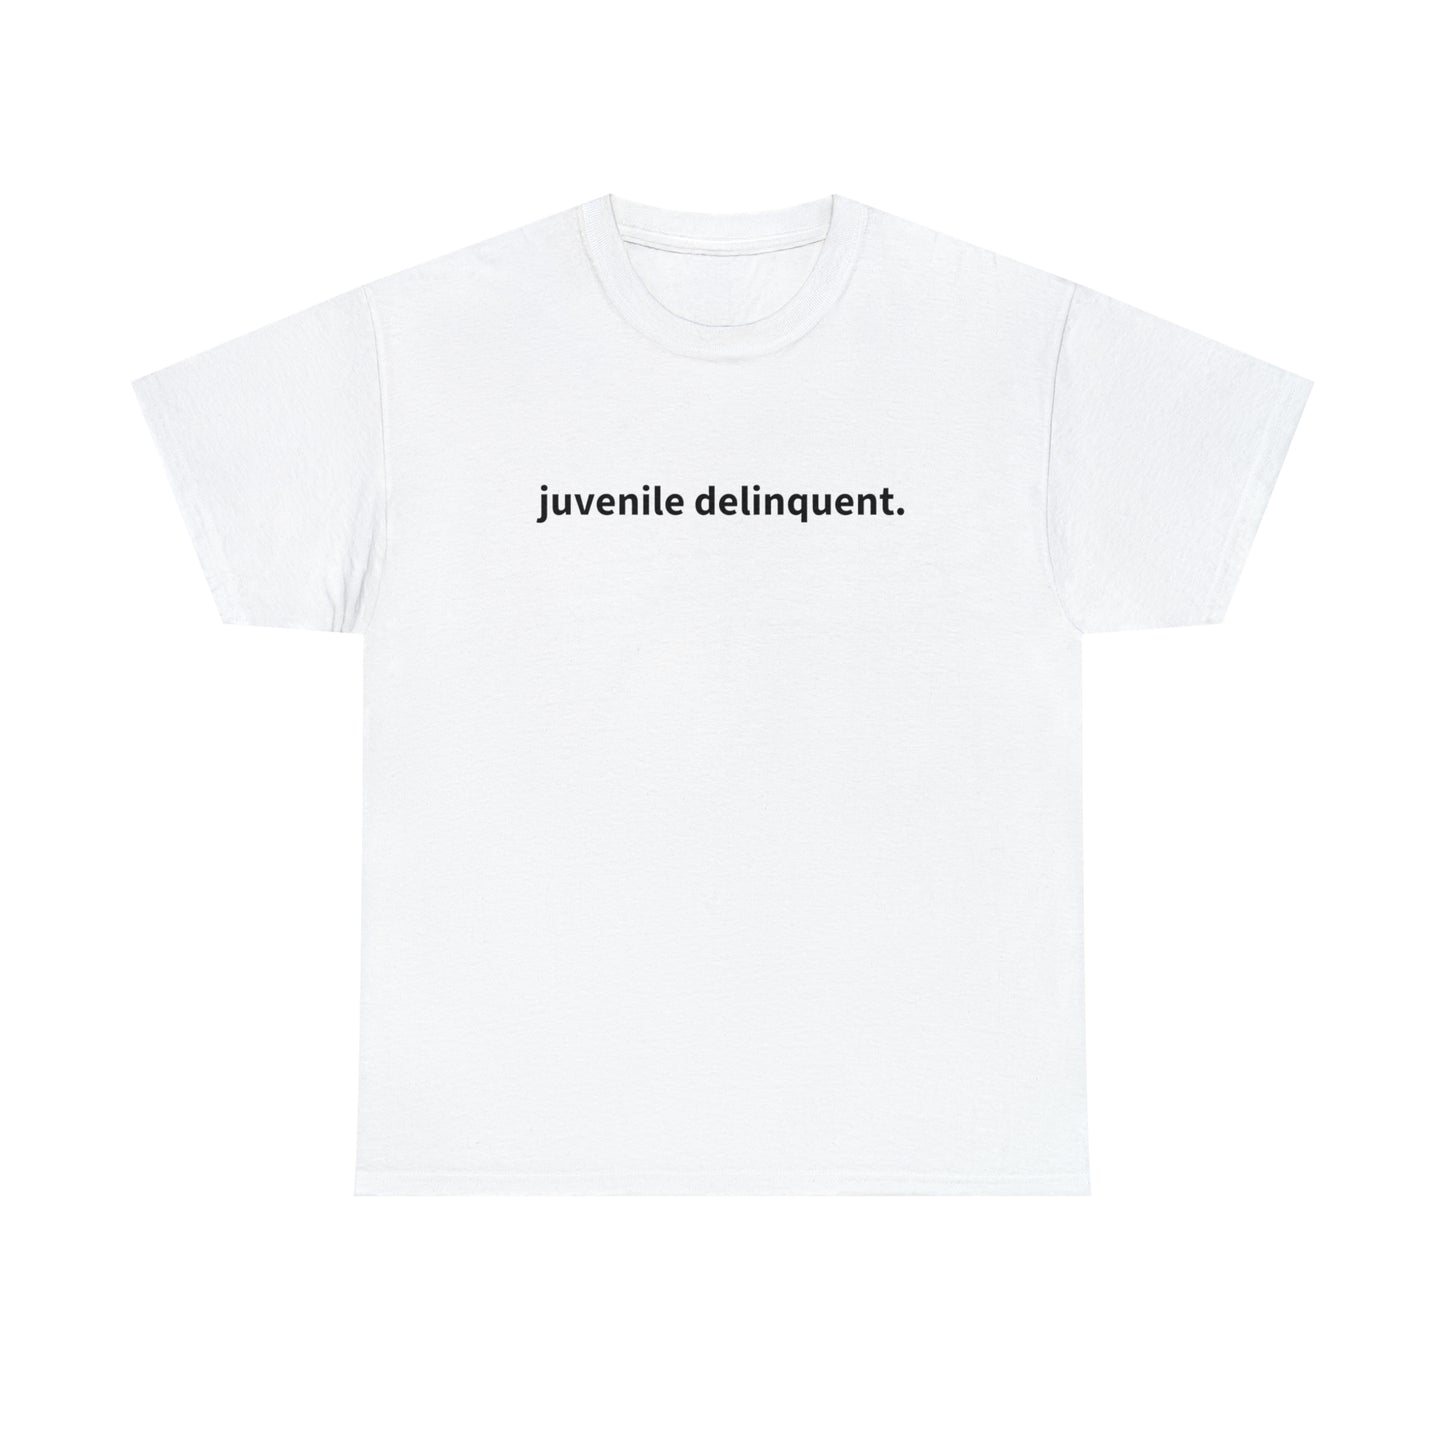 "juvenile delinquent" T-Shirt!